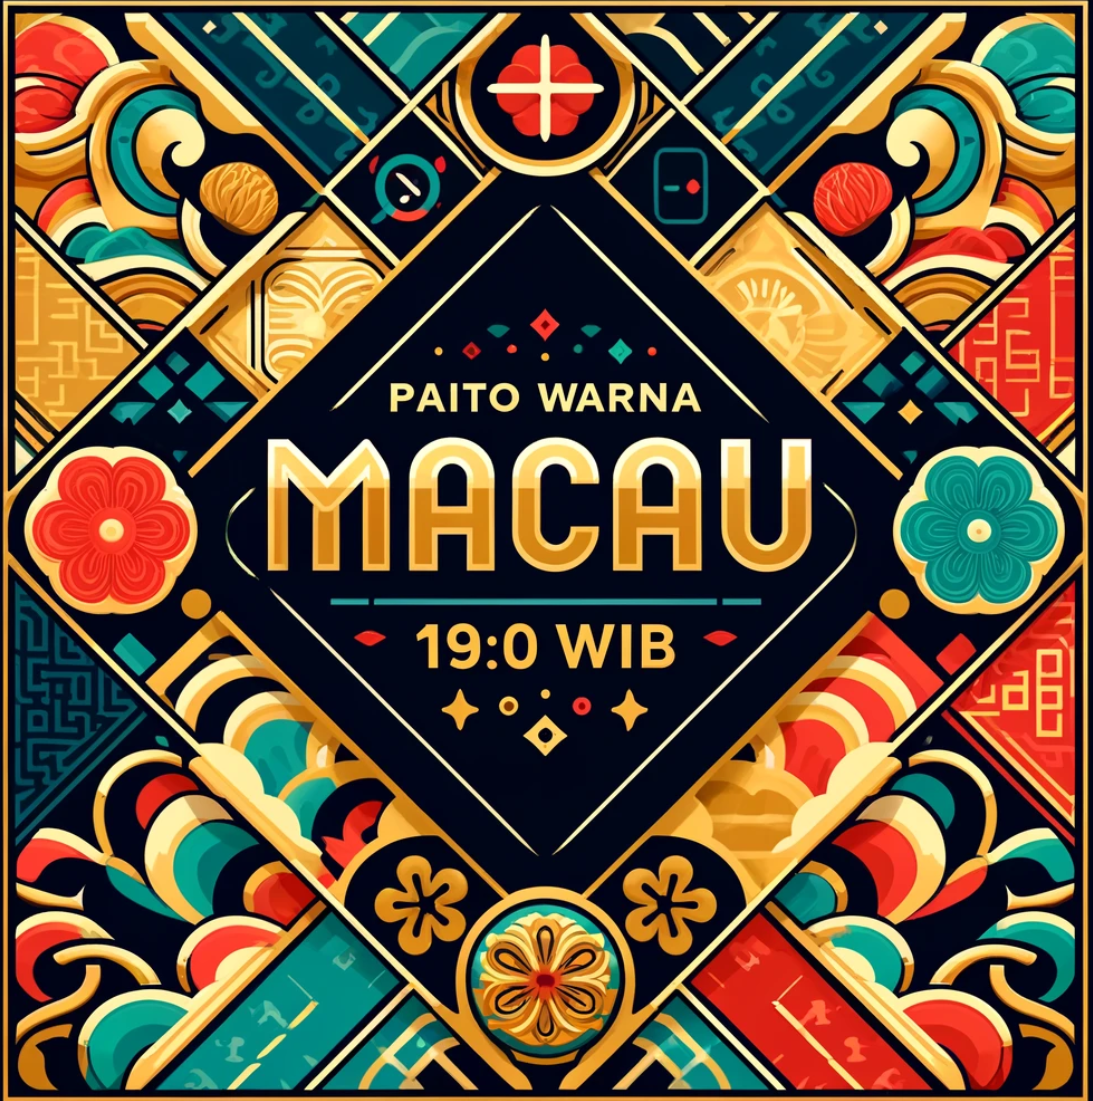 Paito Macau 19:00 WIB | Paito Warna Macau 19:00 WIB Lengkap